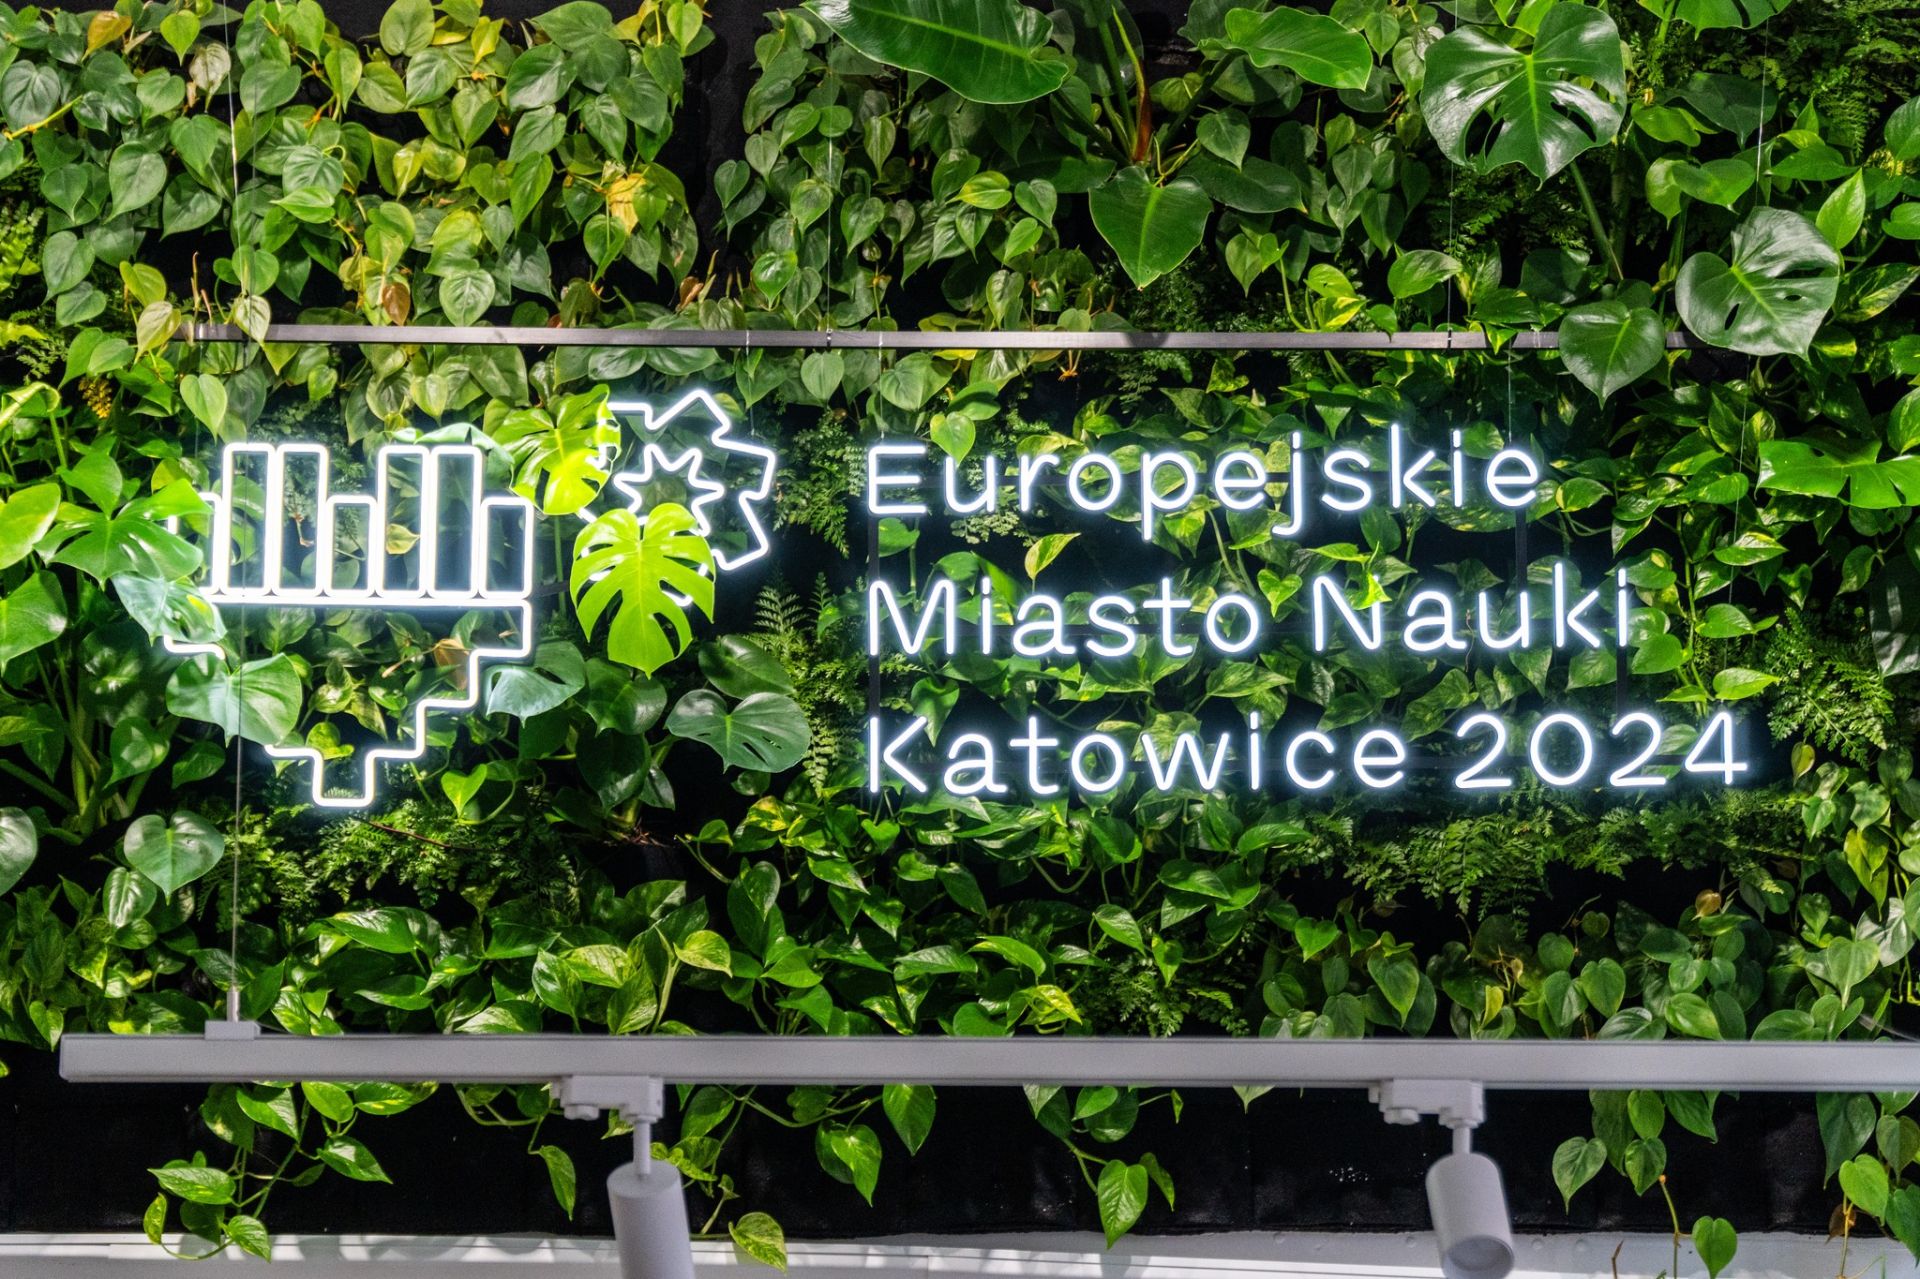 Katowice Europejskim Miastem Nauki